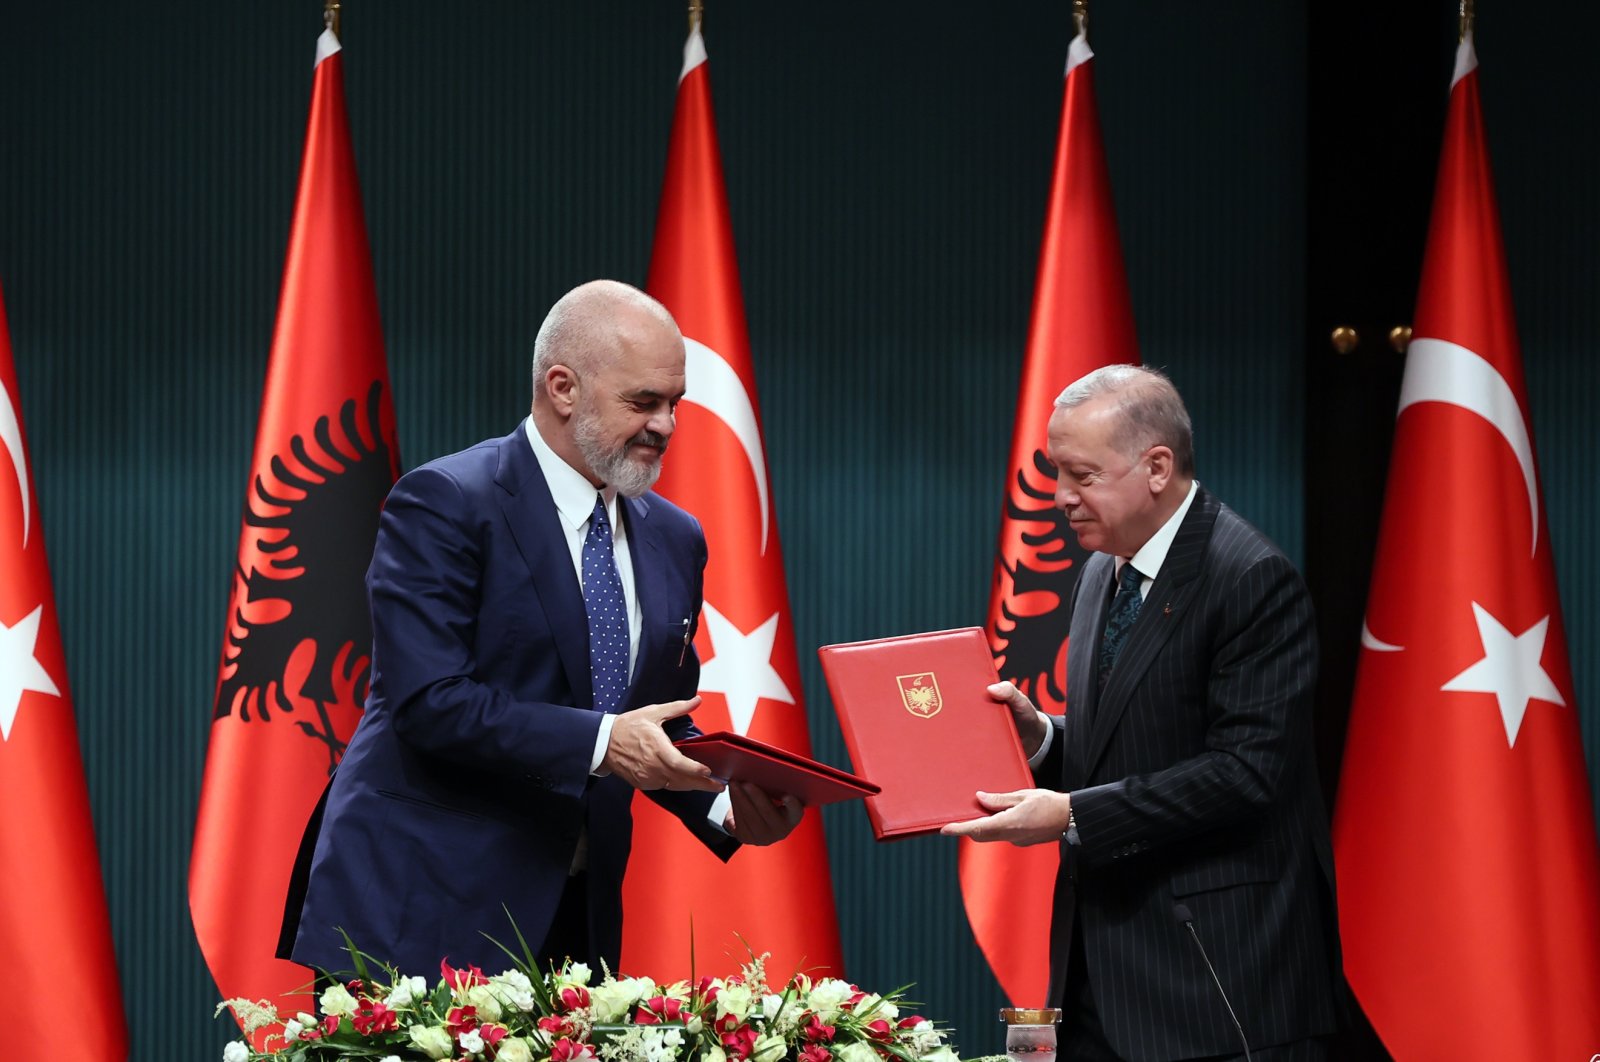 Albanian Prime Minister Edi Rama (L) and President Recep Tayyip Erdoğan sign a cooperation deal in the capital Ankara, Turkey, Jan. 6, 2020. (AA Photo)